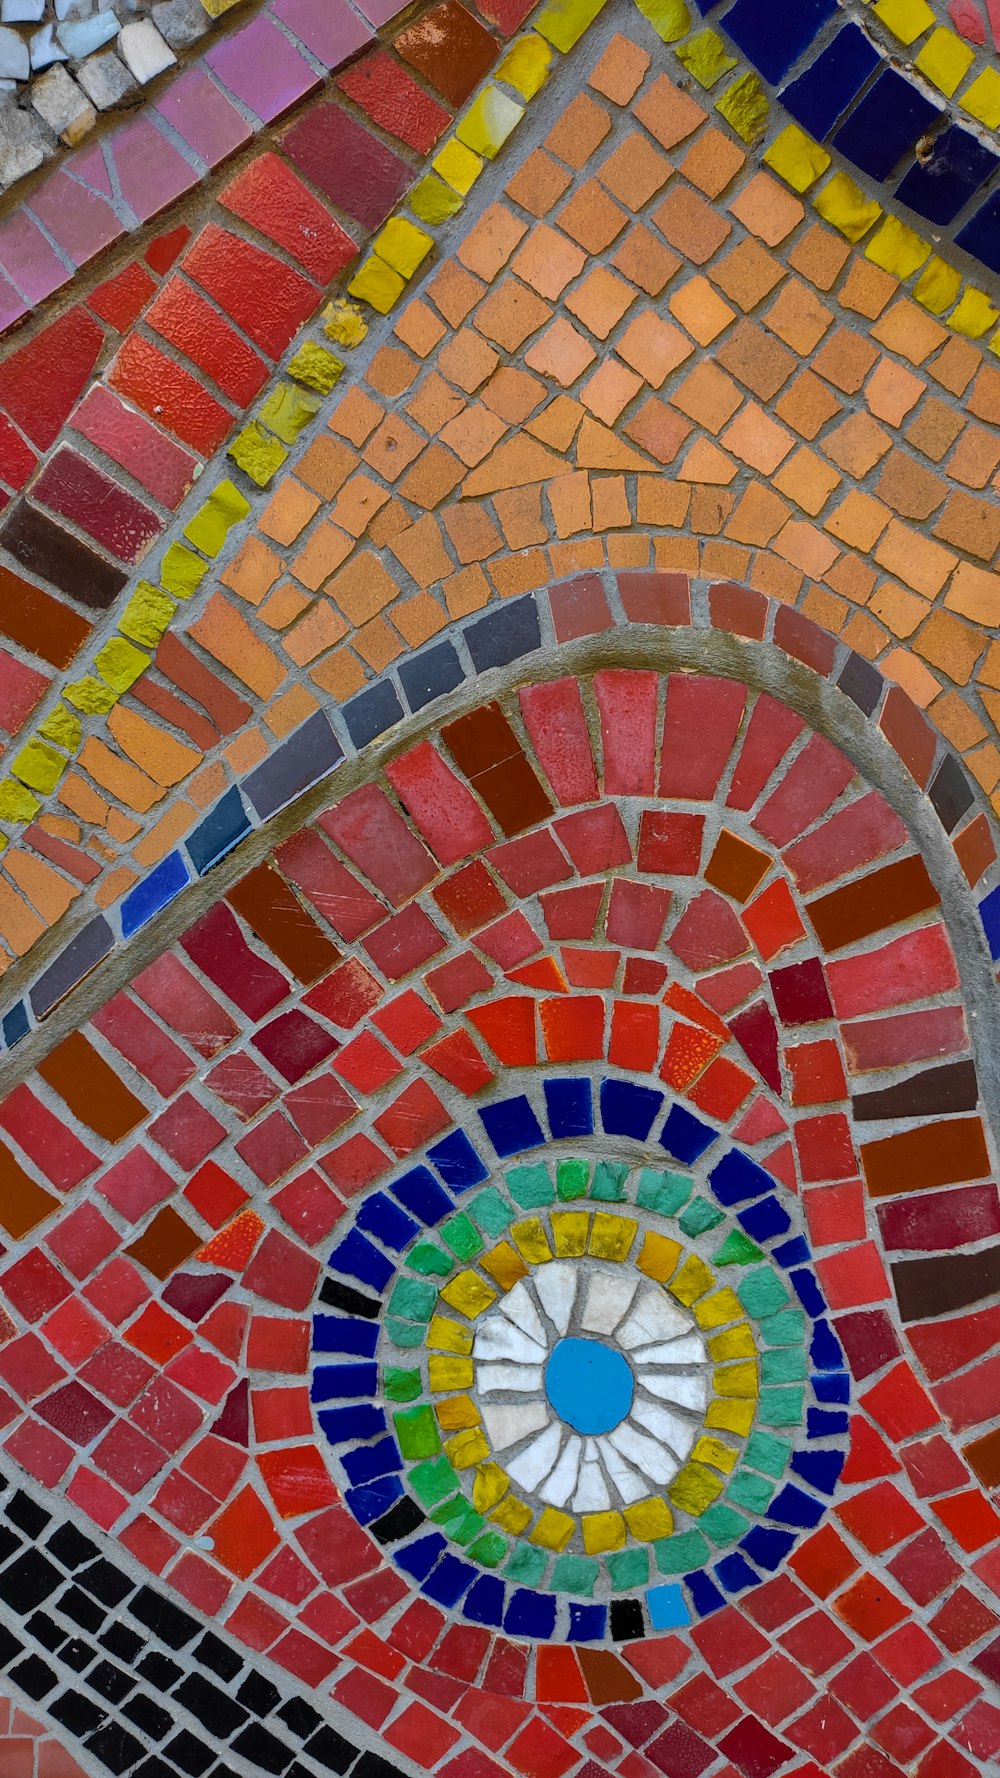 a close up of a multicolored mosaic design